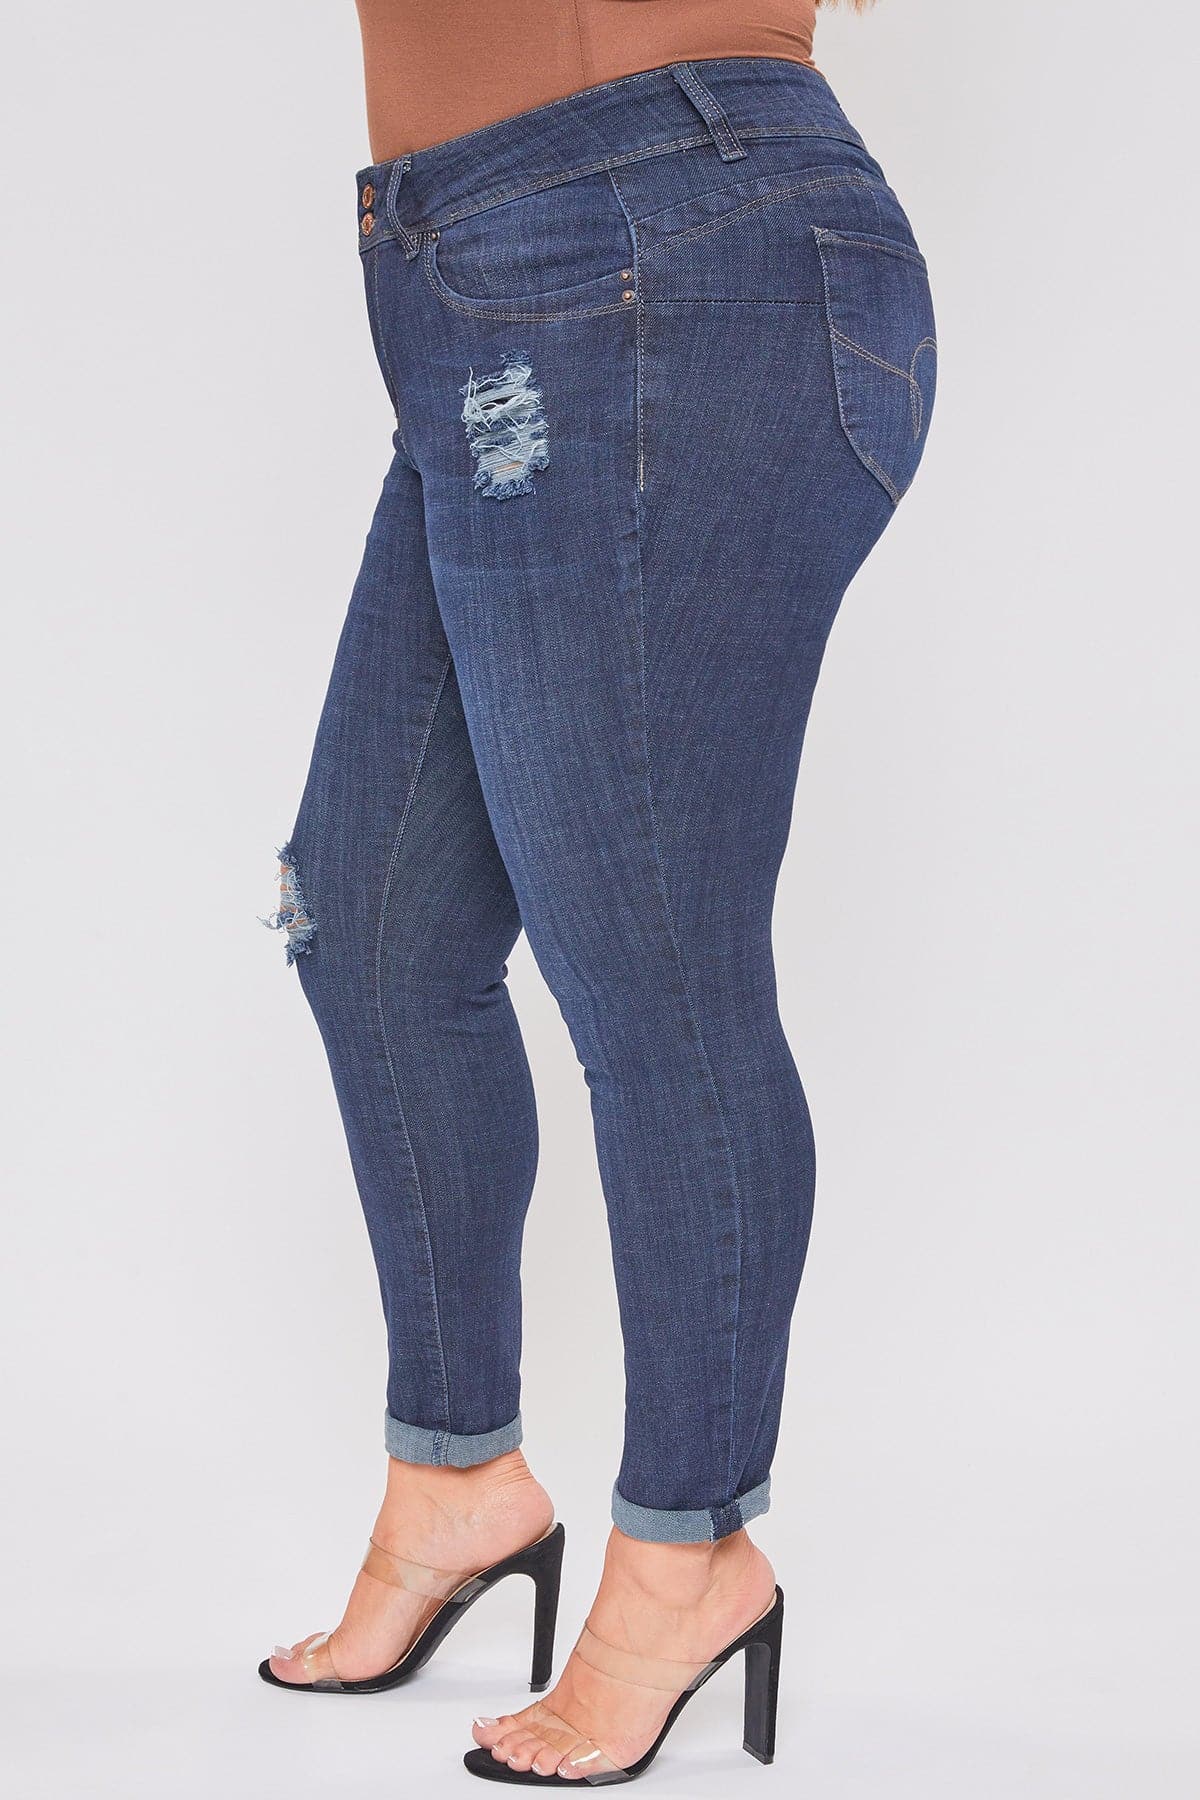 Women's Plus Size WannaBettaButt Premium Roll Up Cuff Ankle Jeans